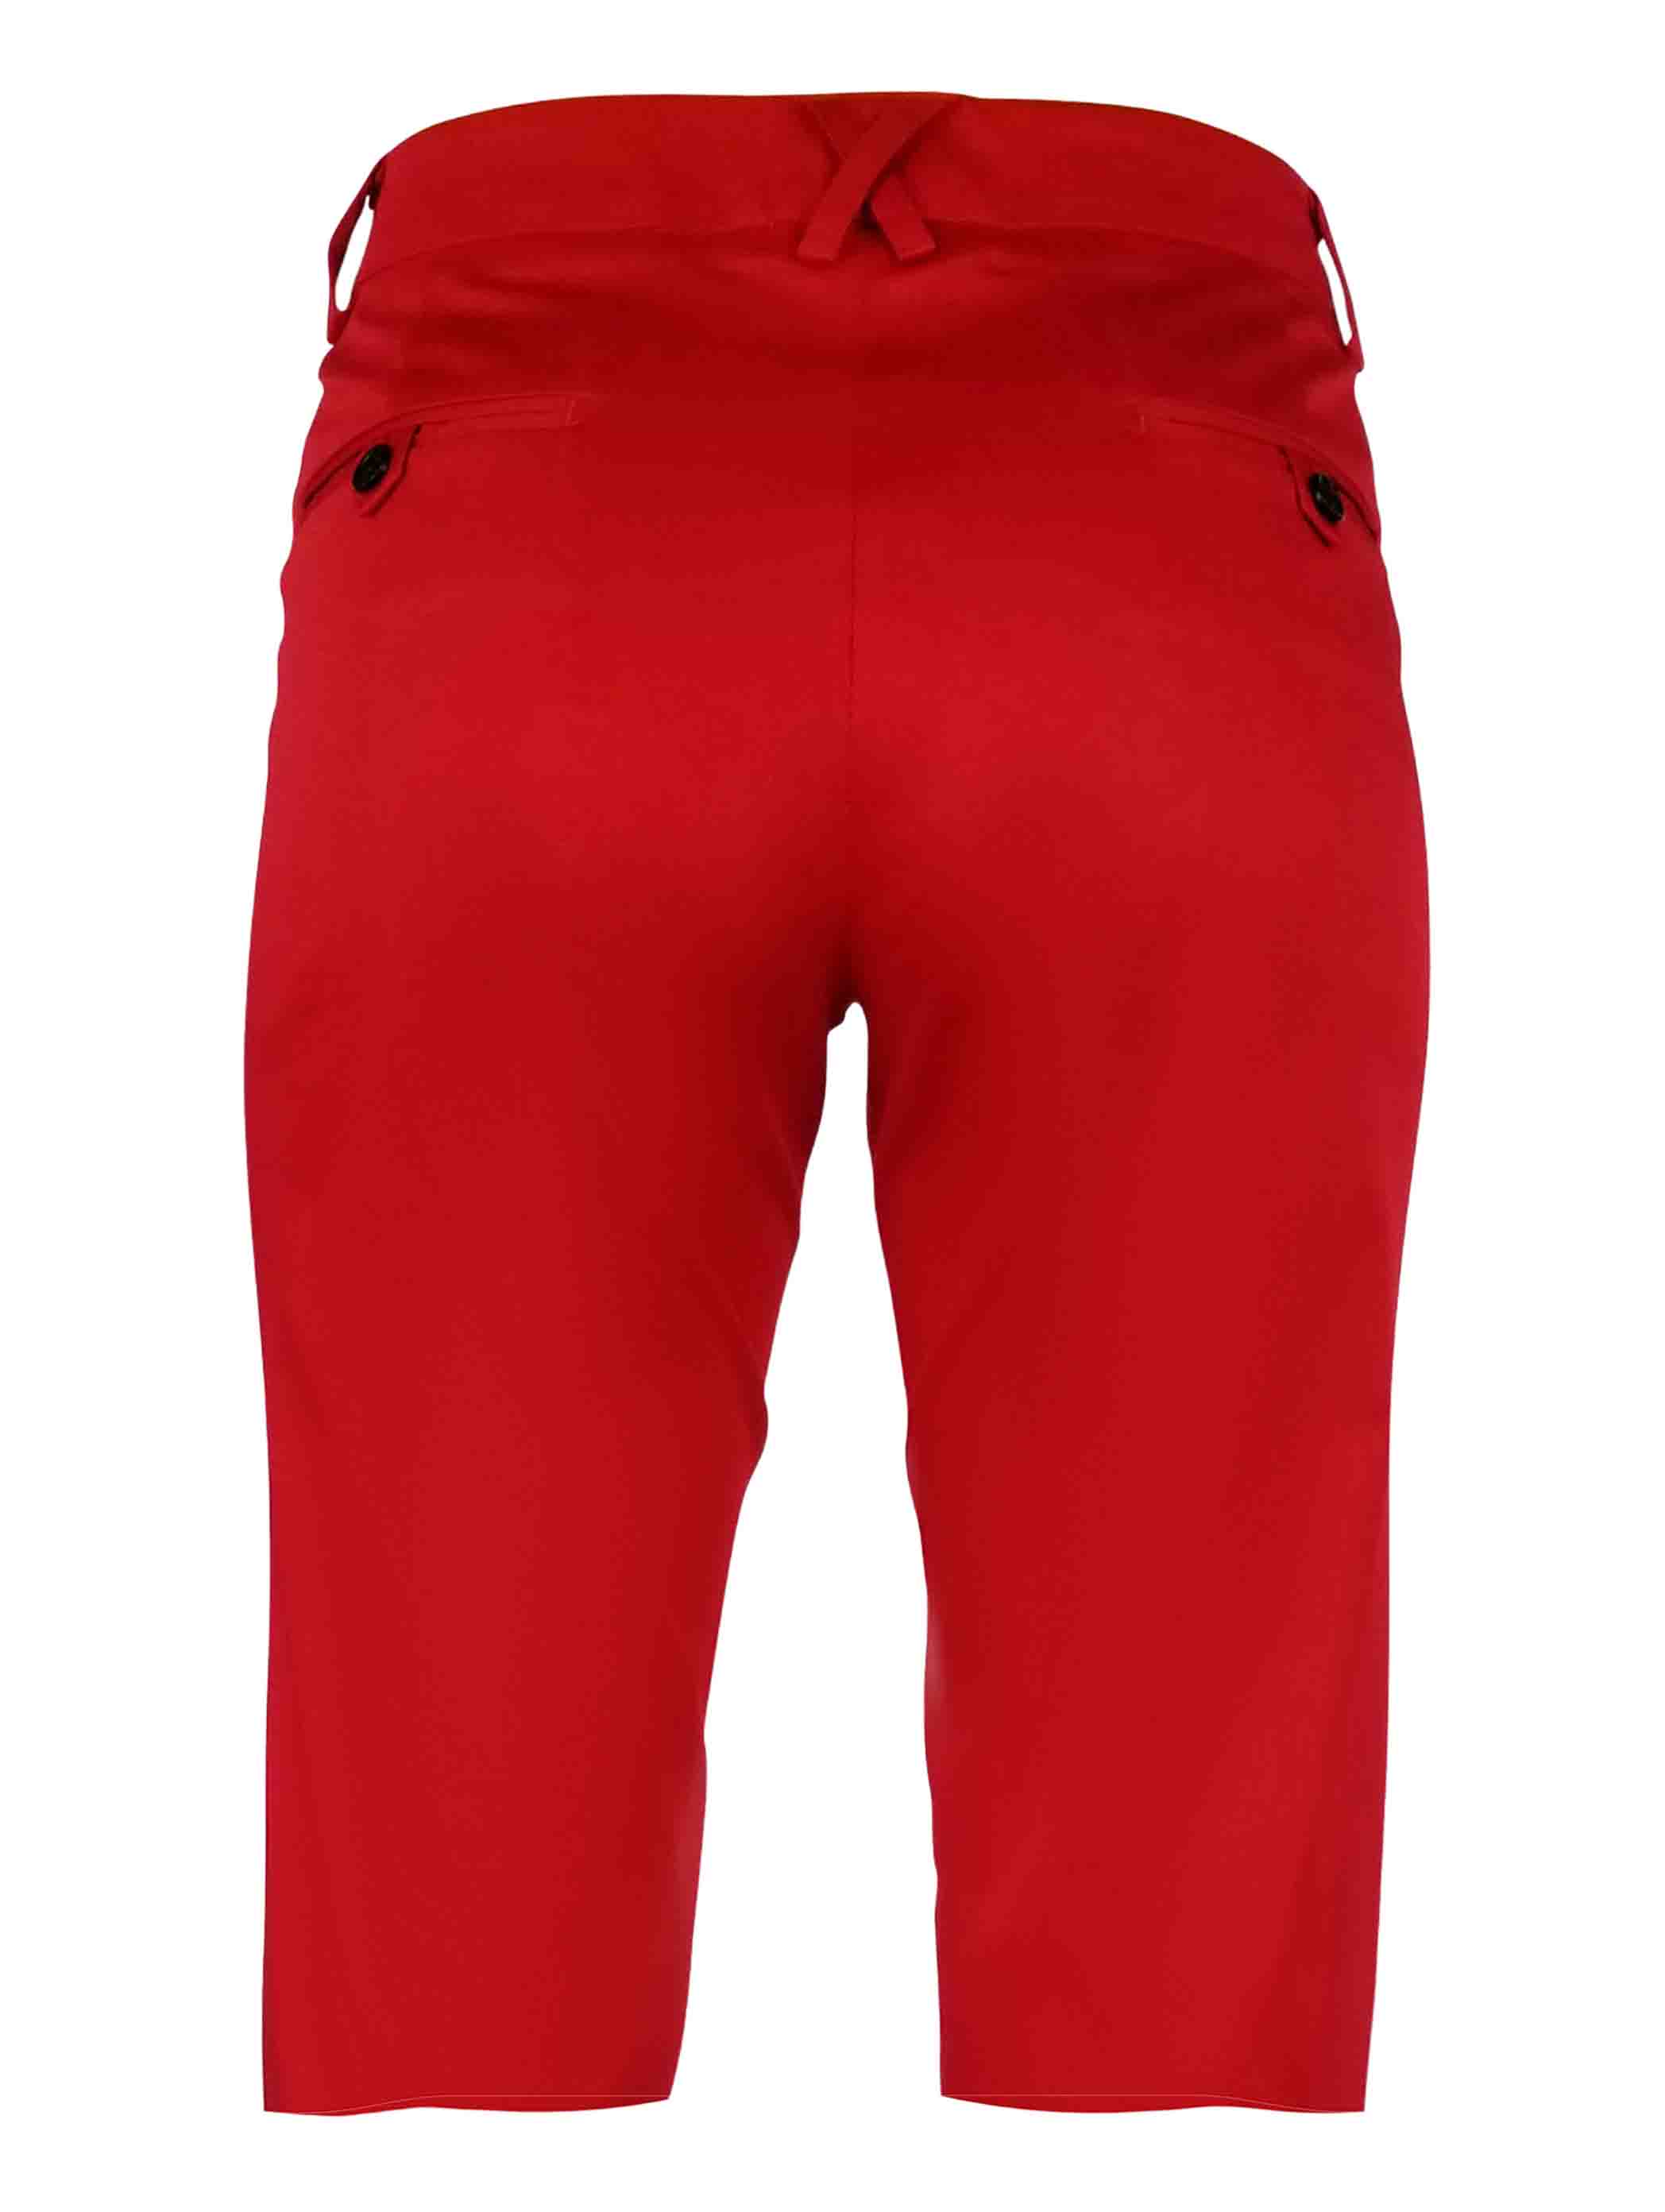 Women's Shorts - Red - Uniform Edit